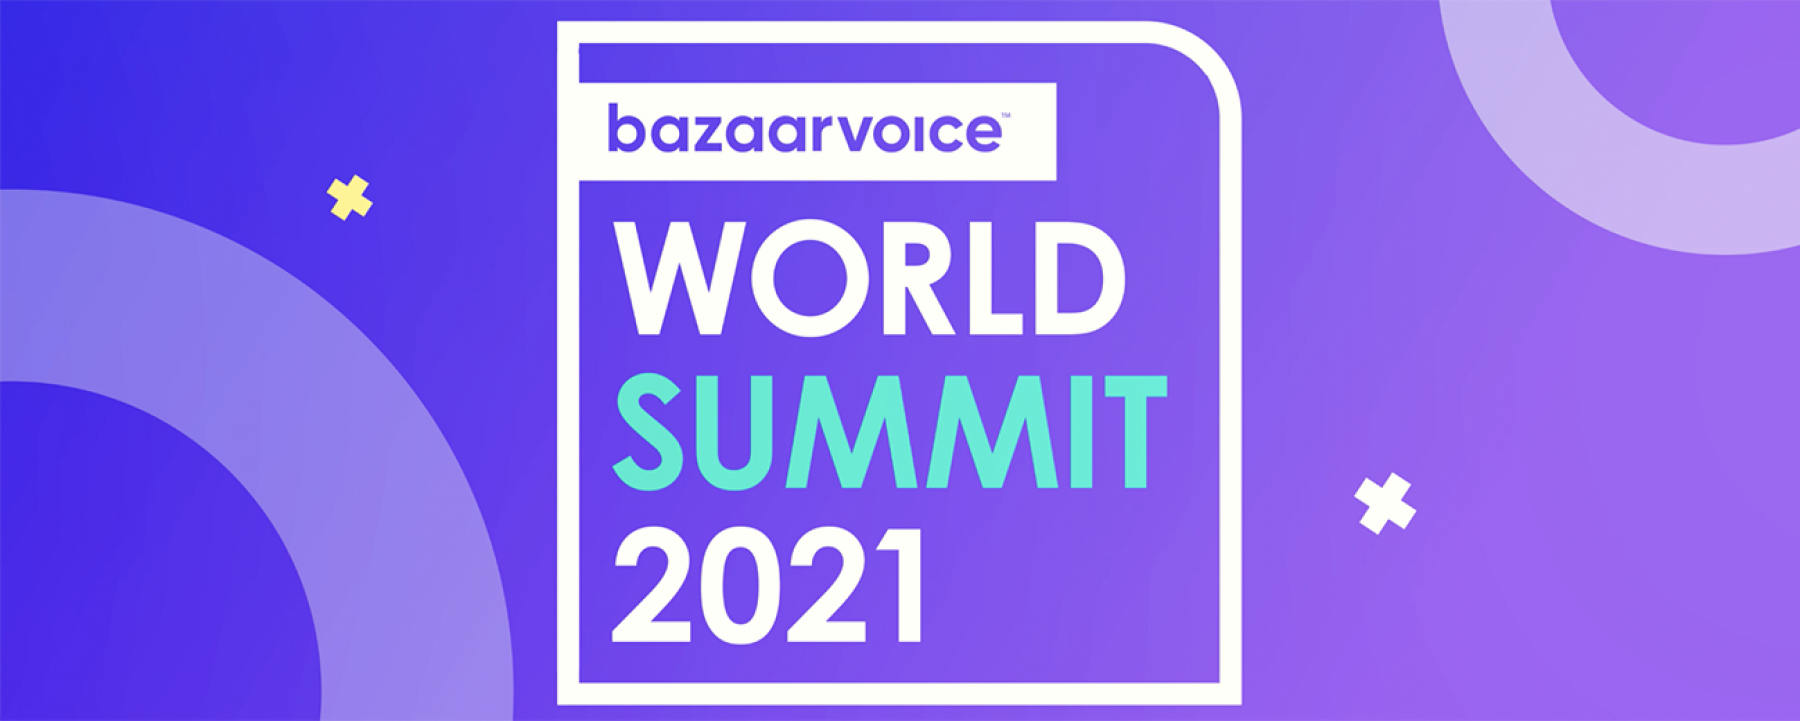 Bazaarvoice World Summit 2021, organisé par Bazaarvoice en ligne du 10 au 11 mars 2021